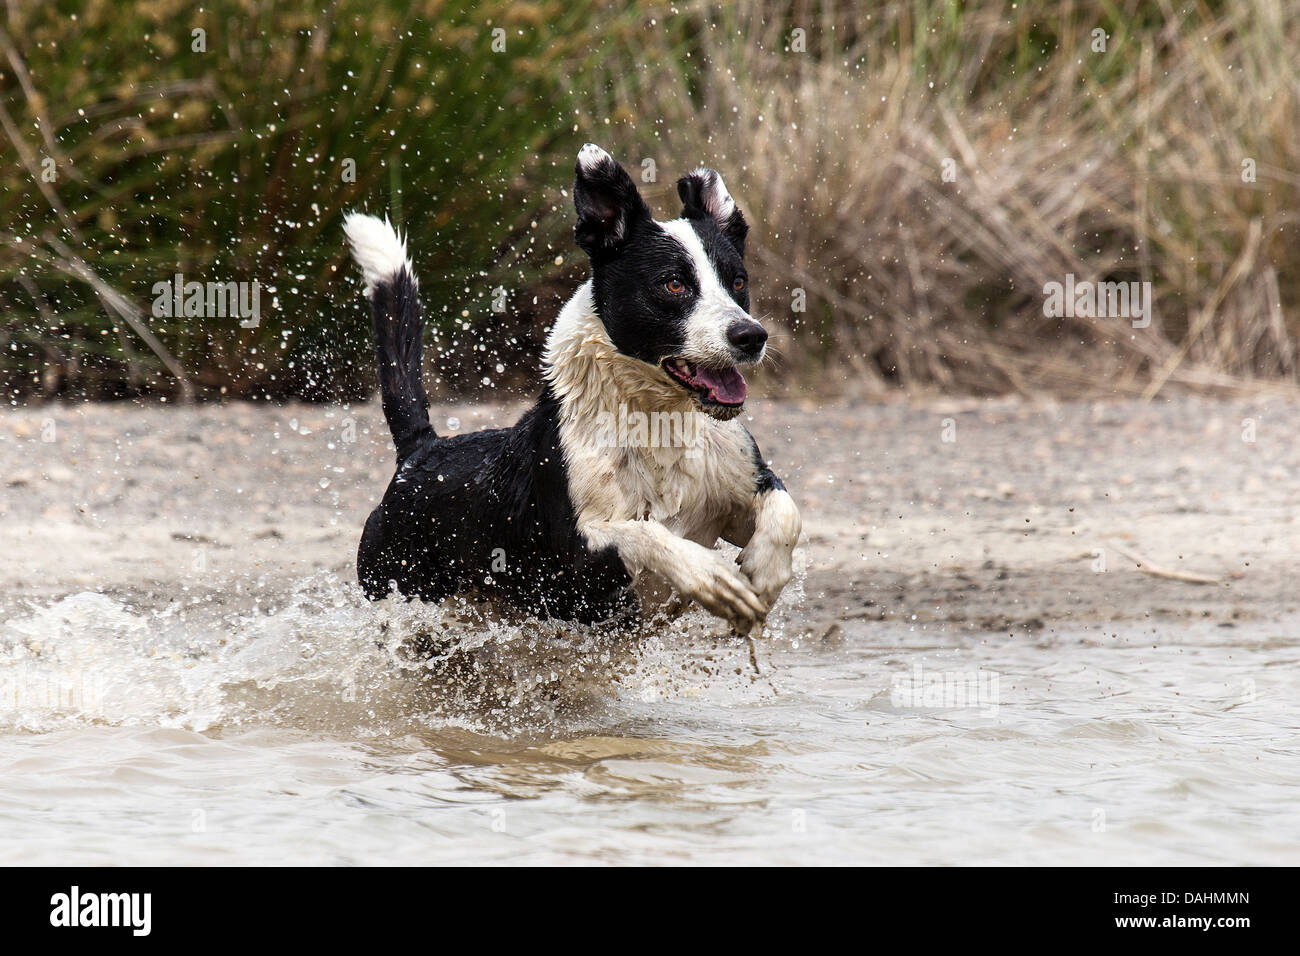 Jake - swimming dog Stock Photo